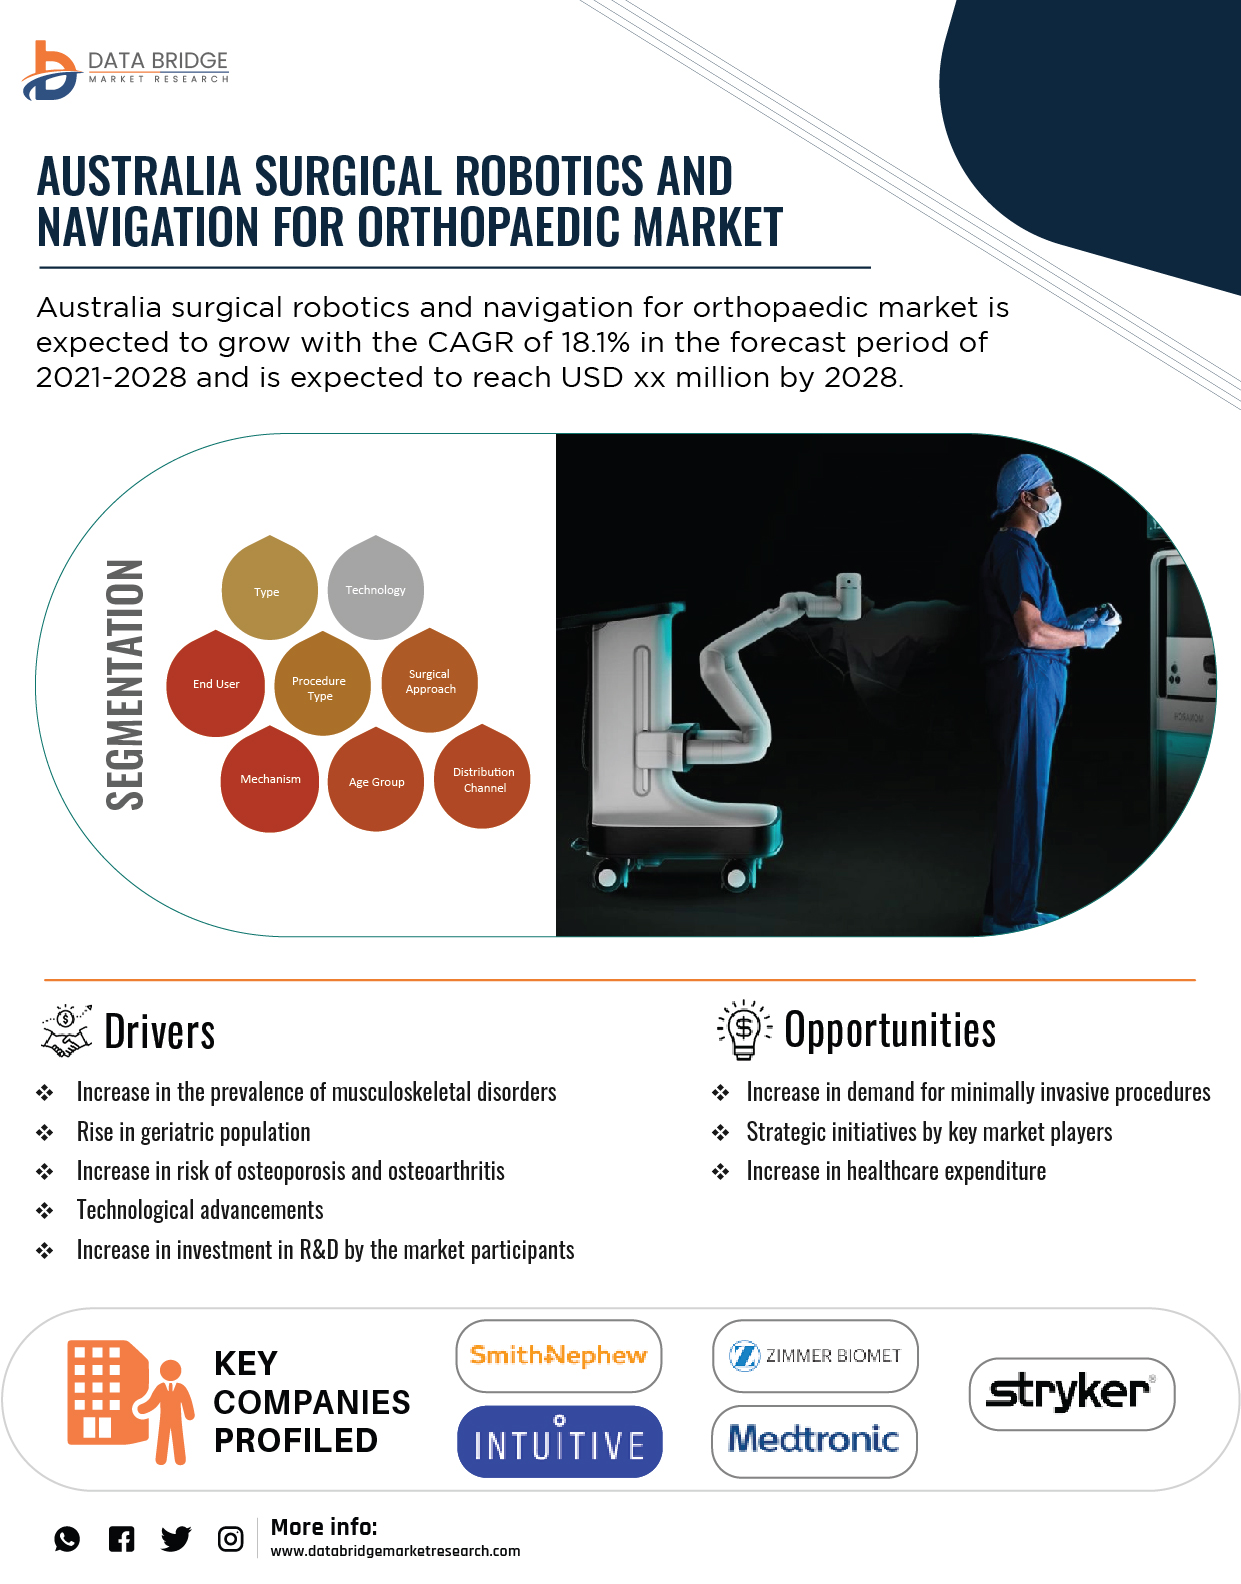 Australia Surgical Robotics and Navigation for Orthopaedic Market